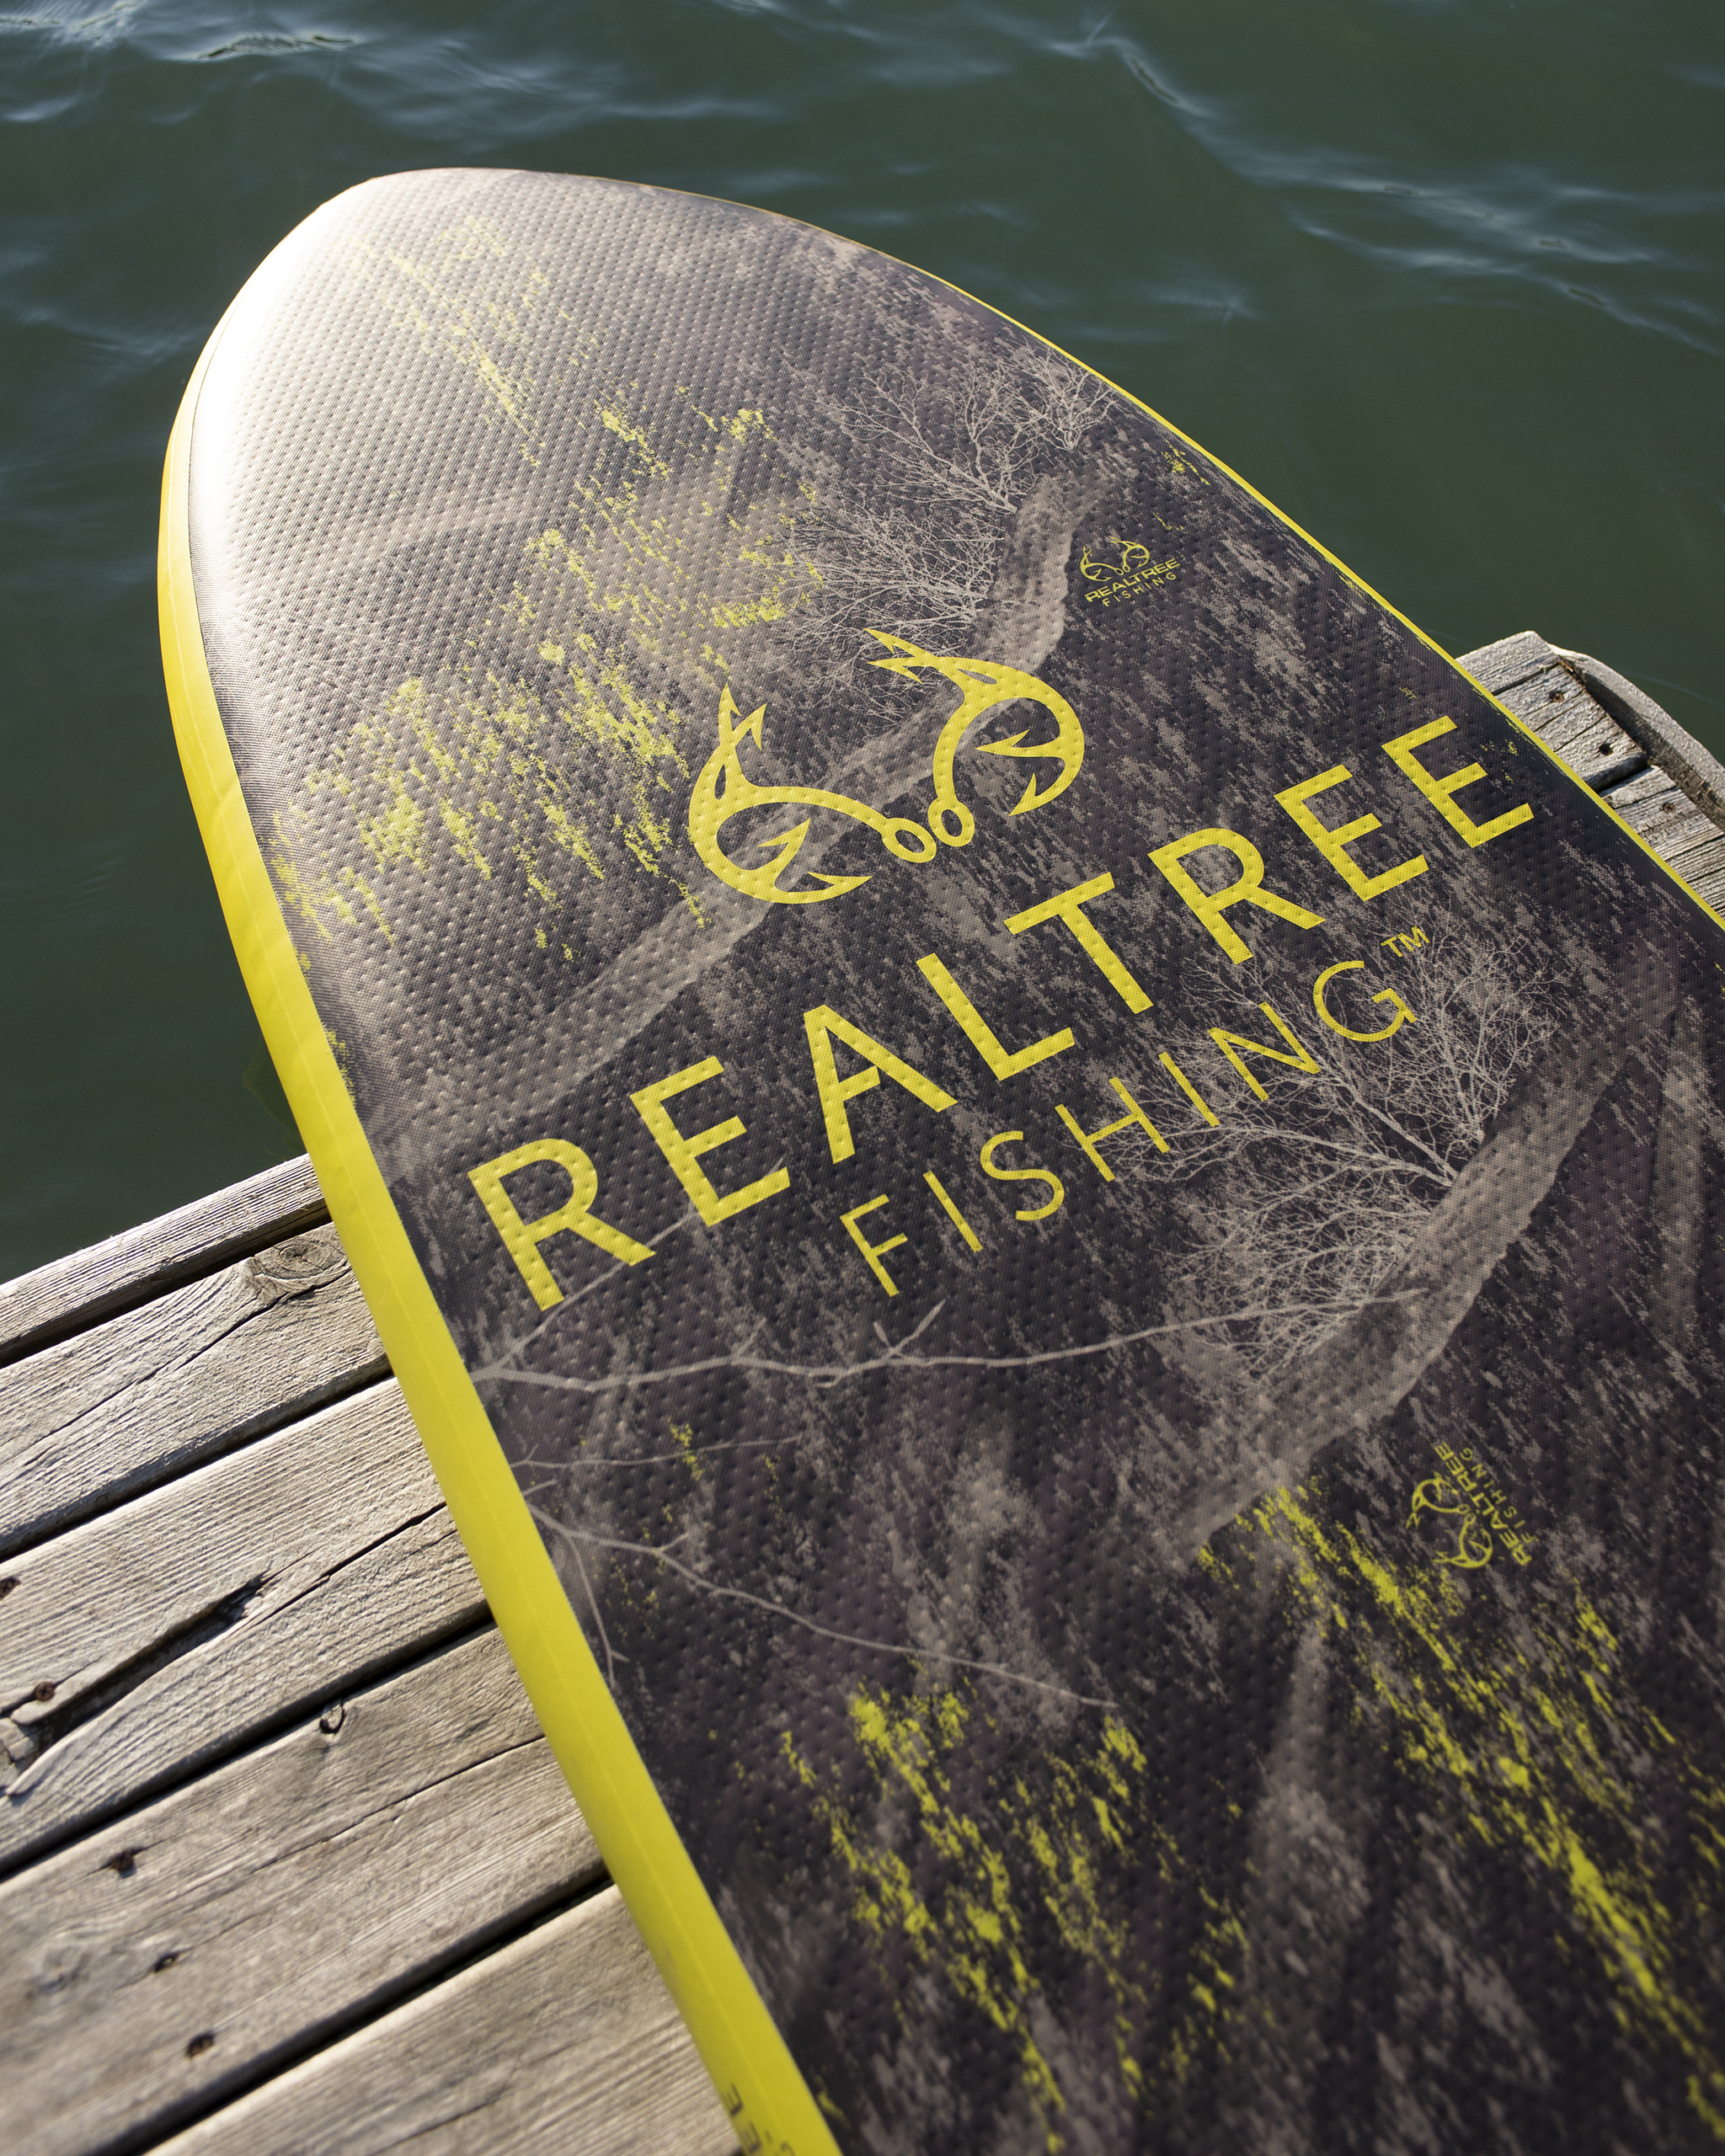 Realtree™ Fishing Hi-Viz Feather Light 10'8" Inflatable Paddle Board